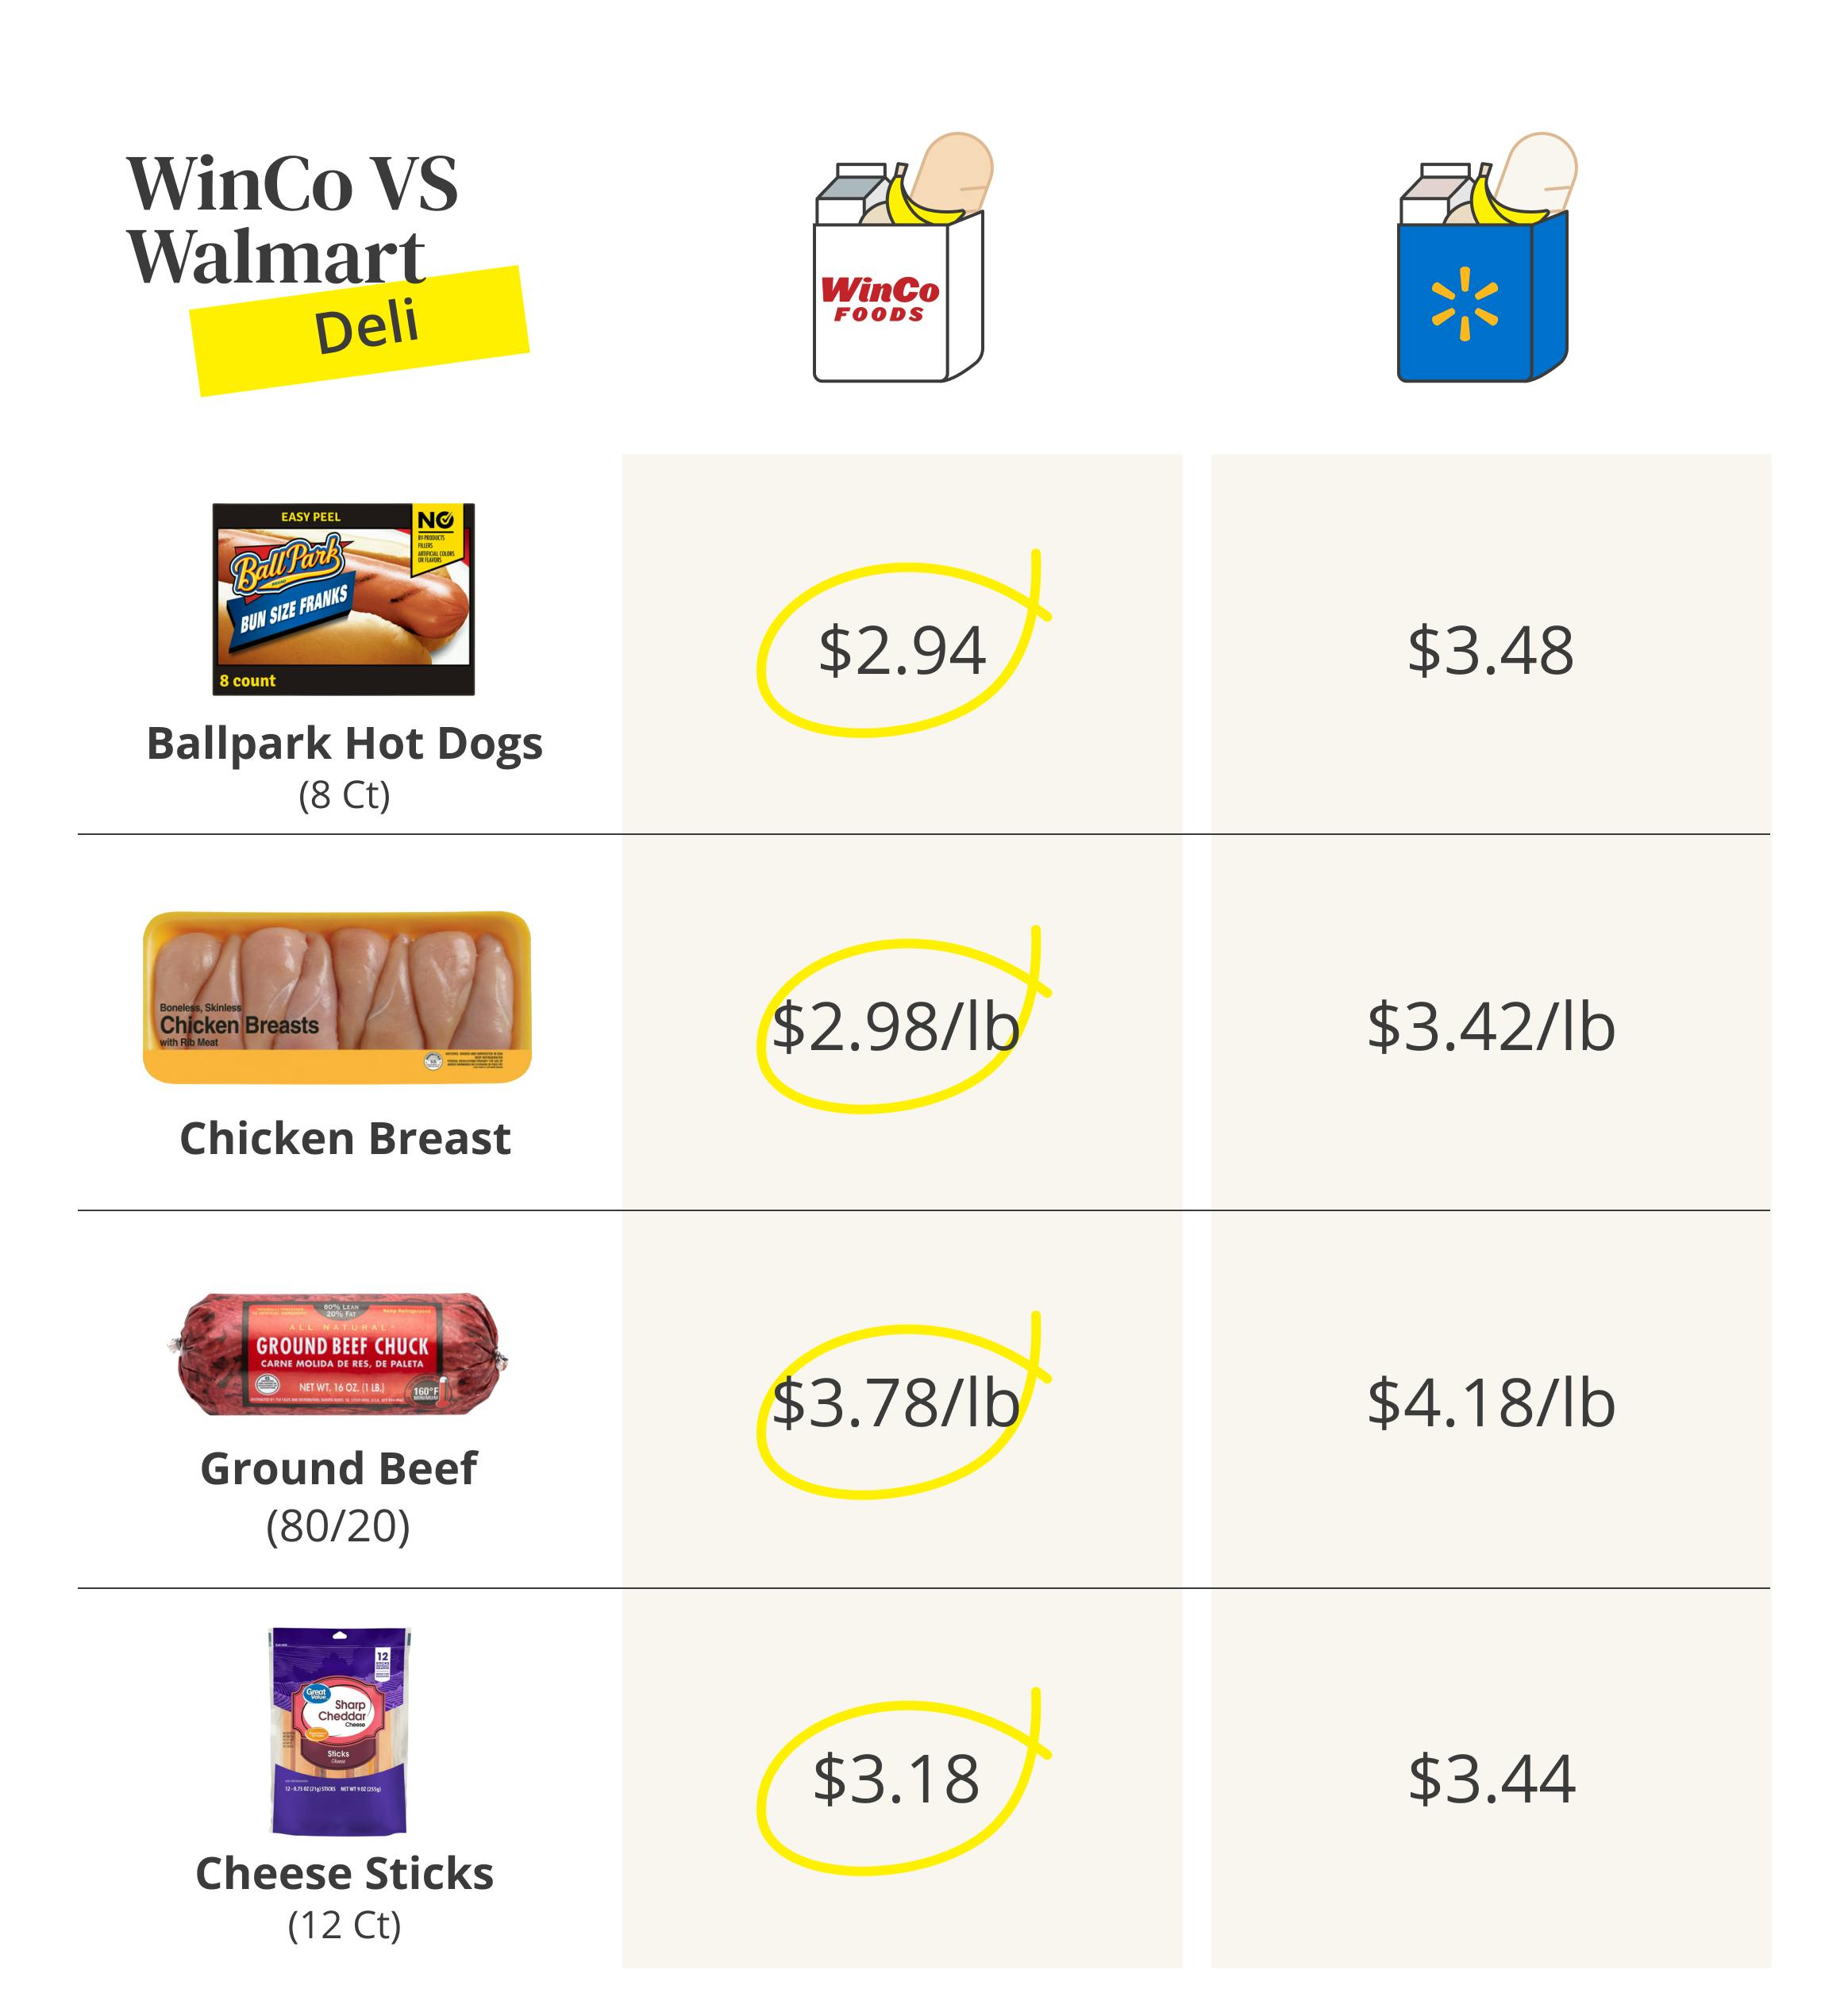 How WinCo prices compare to Walmart prices for deli items.